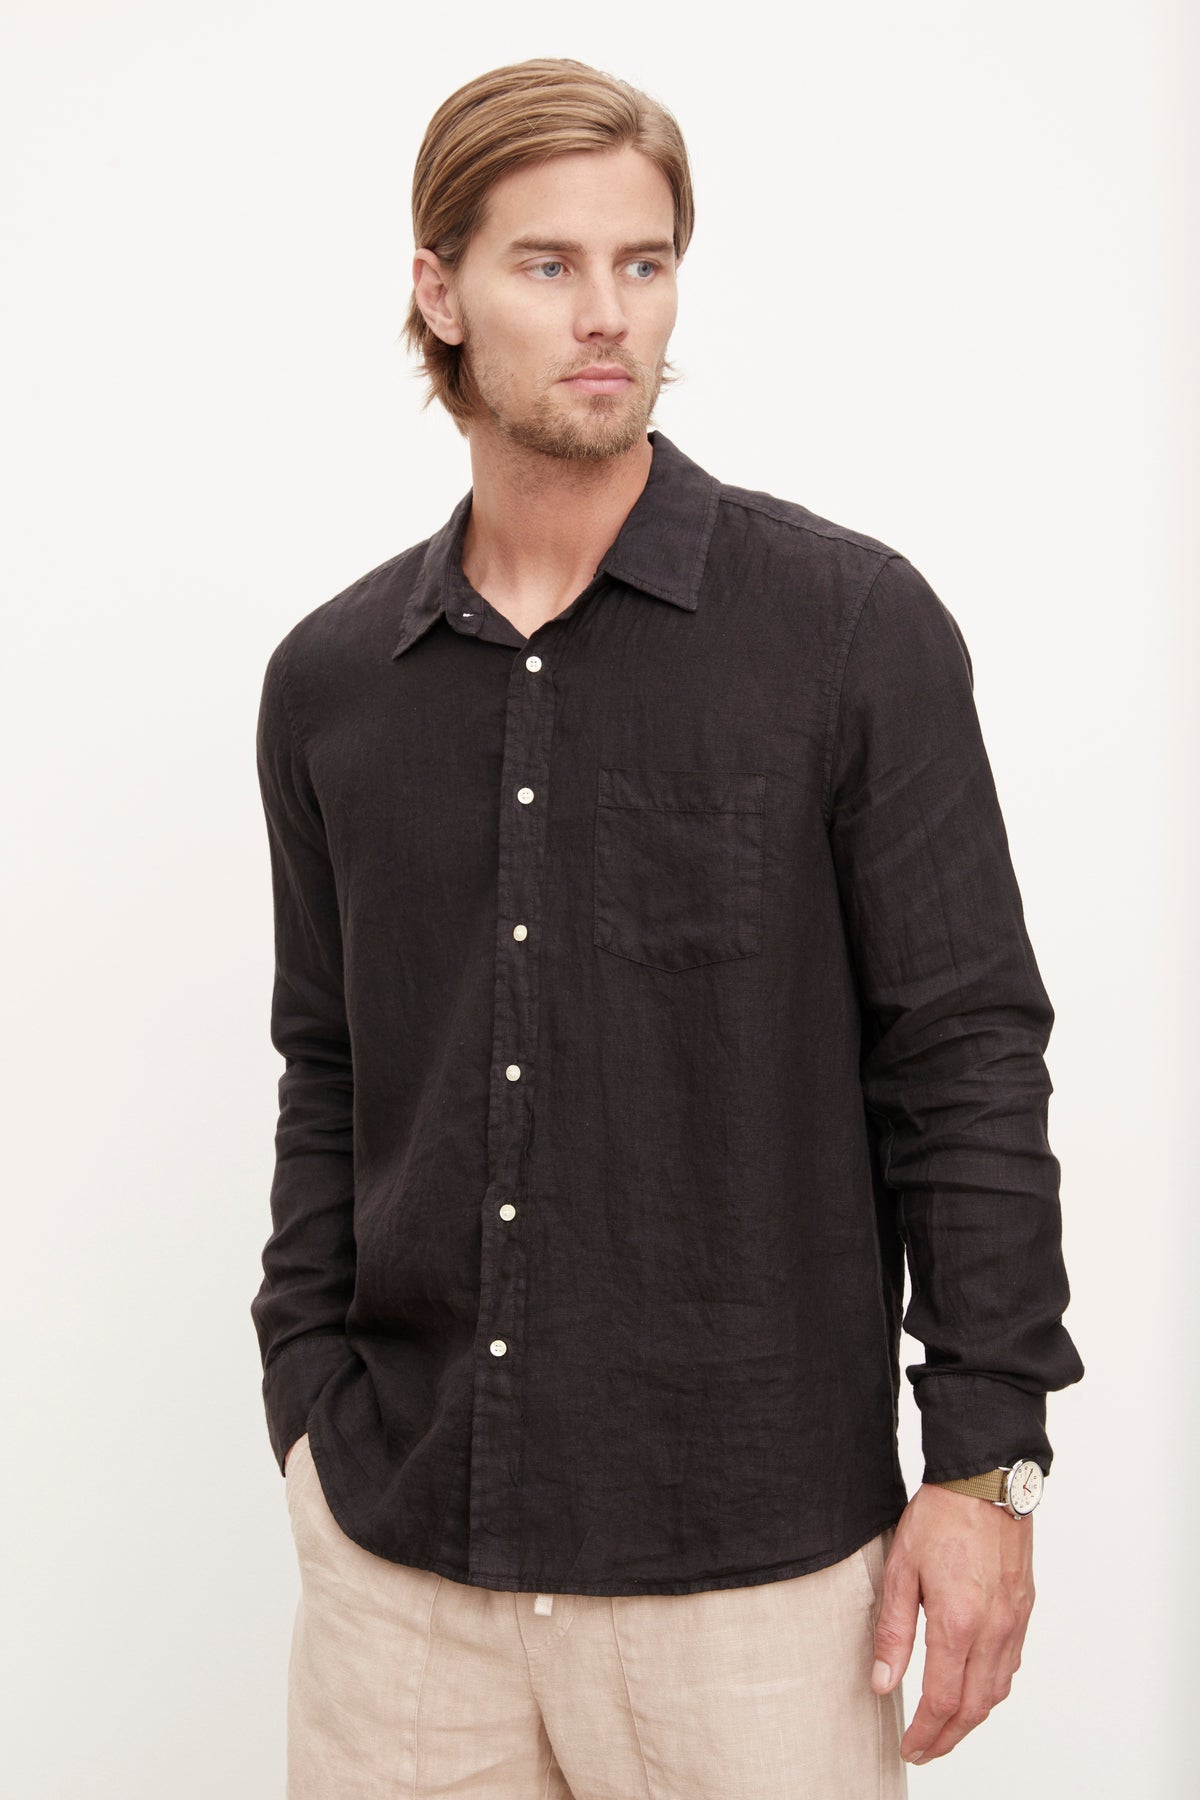 A stylish man wearing a Velvet by Graham & Spencer men's Benton linen button-up shirt with khaki pants.-36009360457921